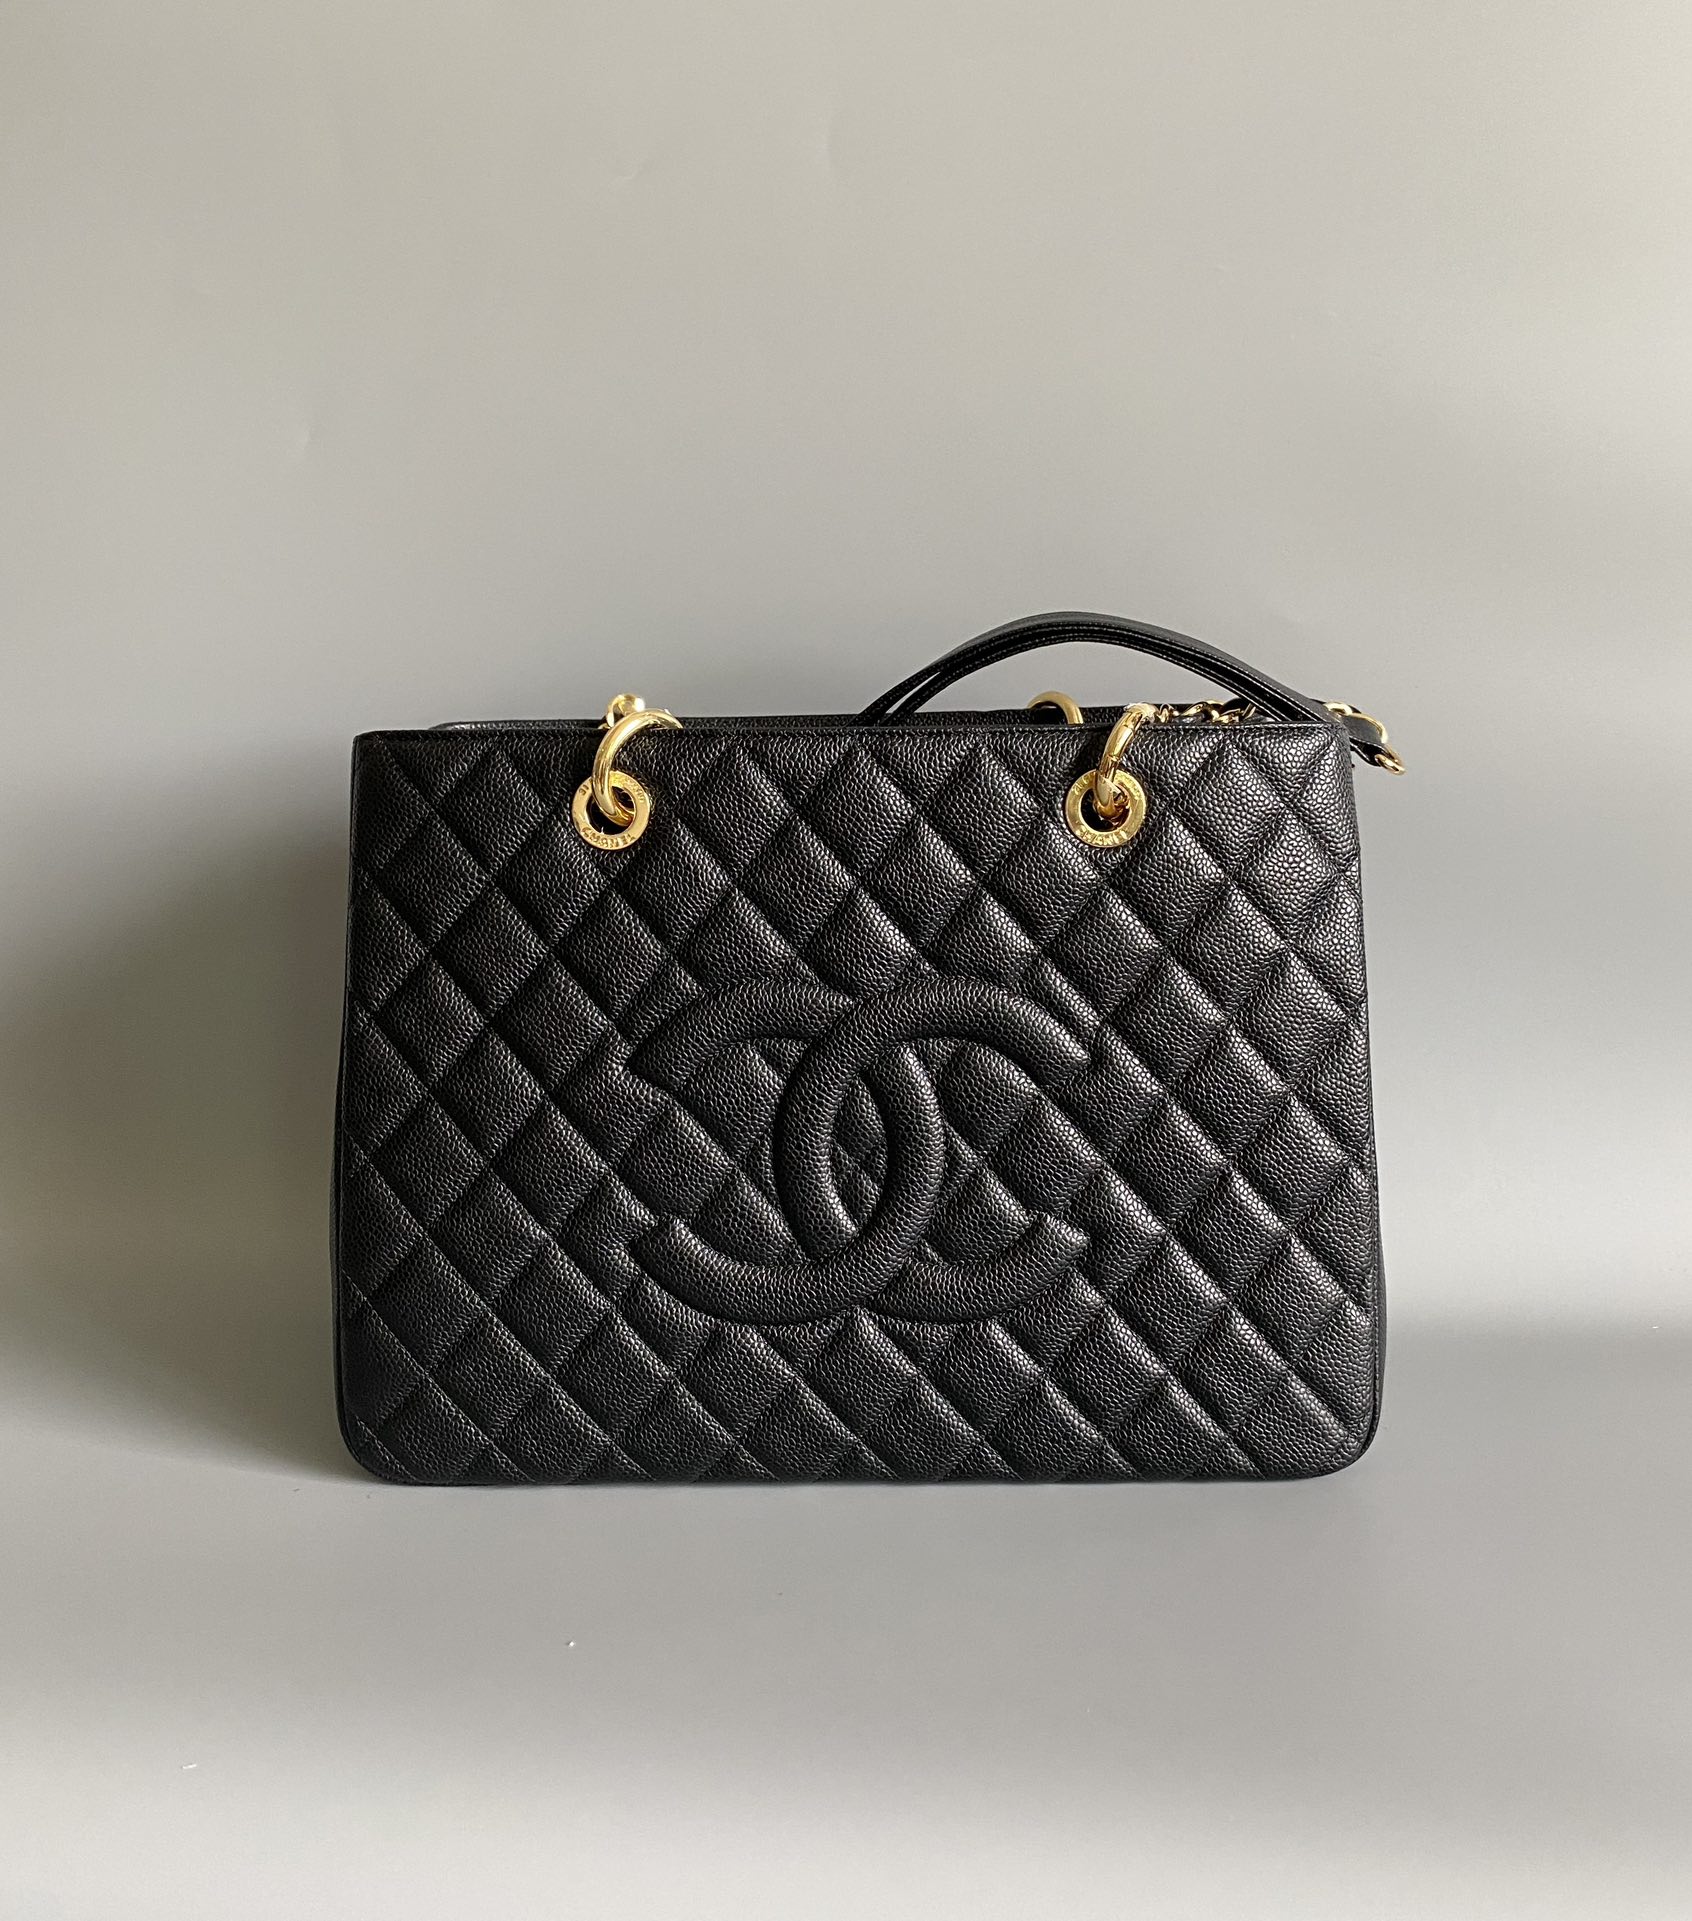 FashionReps | The Best Quality Replica Fashion Handbags Accessories Online Chanel GST Shopping Tote Replica